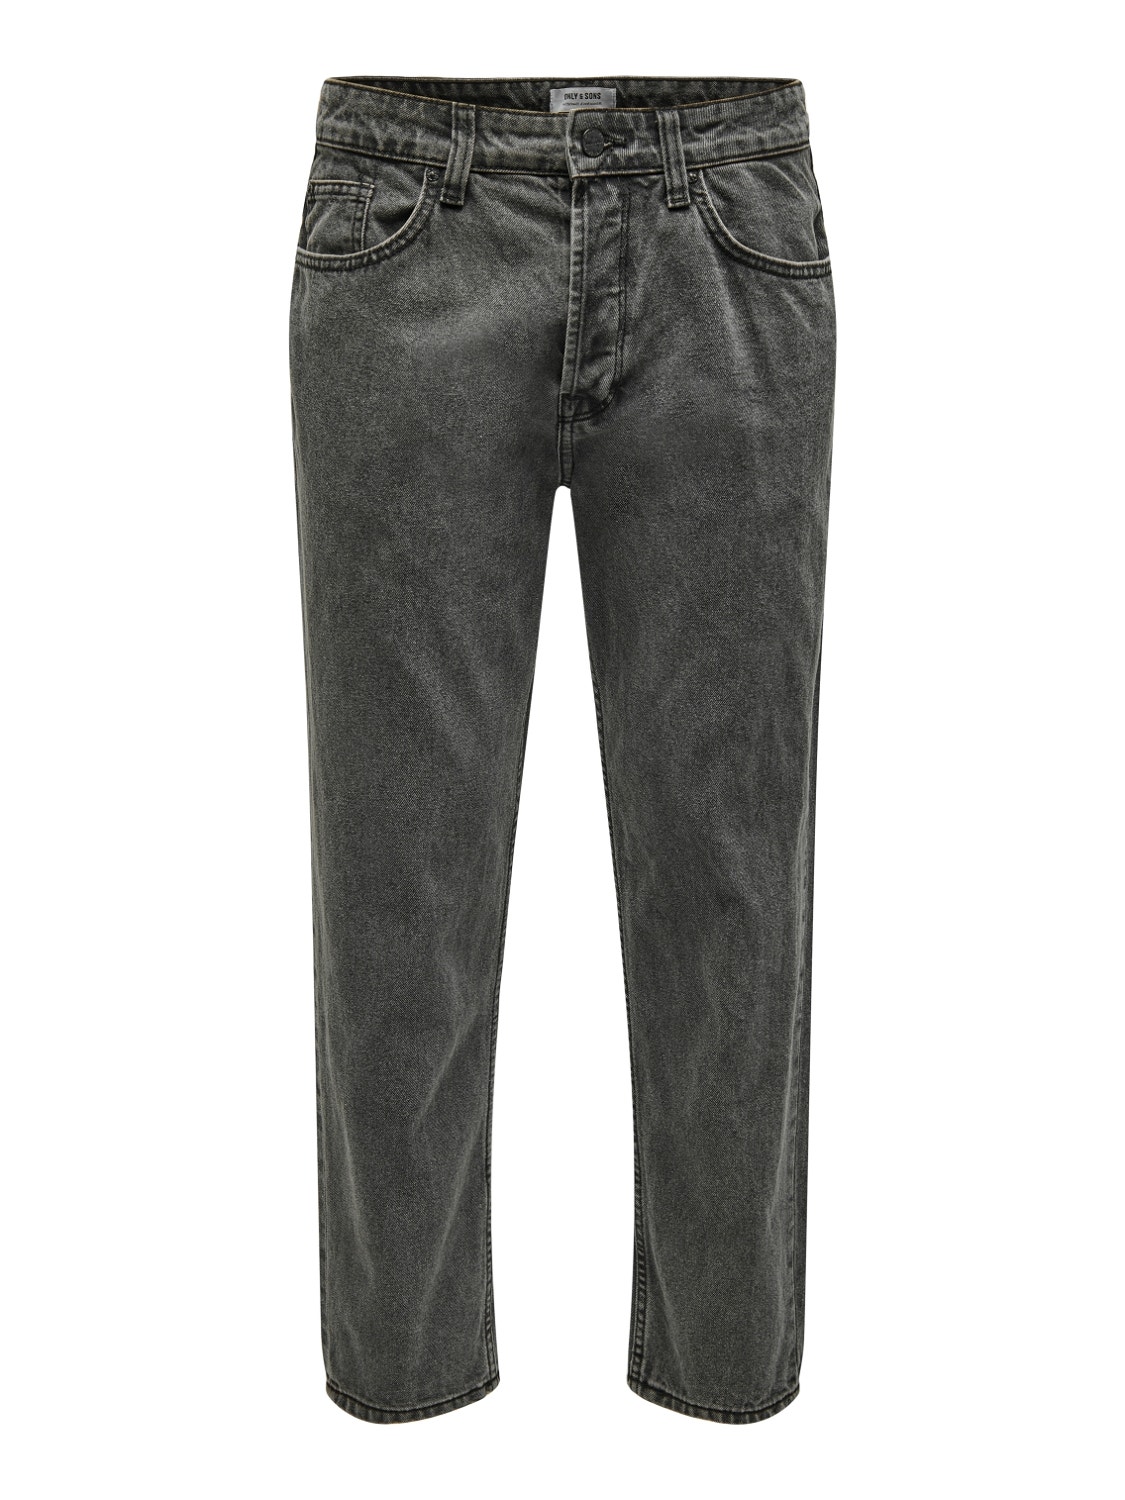 ONLY & SONS Verkürzt Mittlere Taille Jeans -Black Denim - 22022852